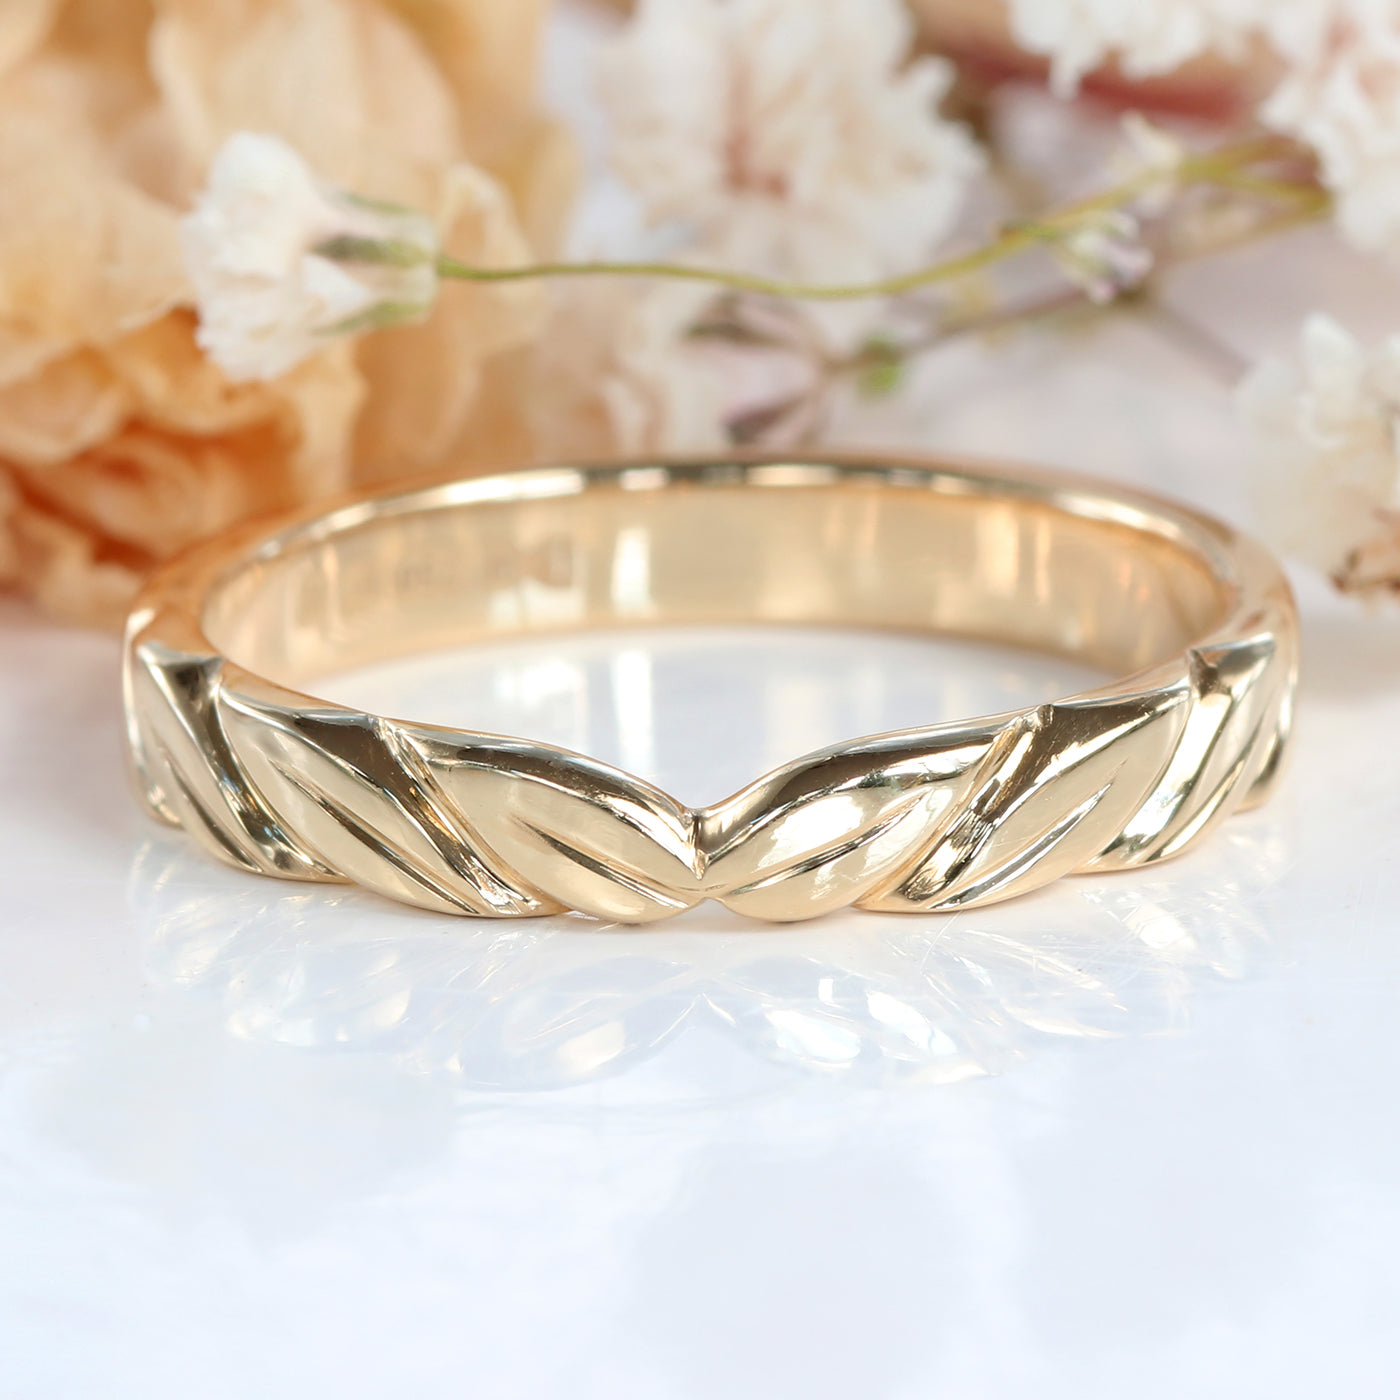 18ct Rose Gold Leaf Wedding Ring